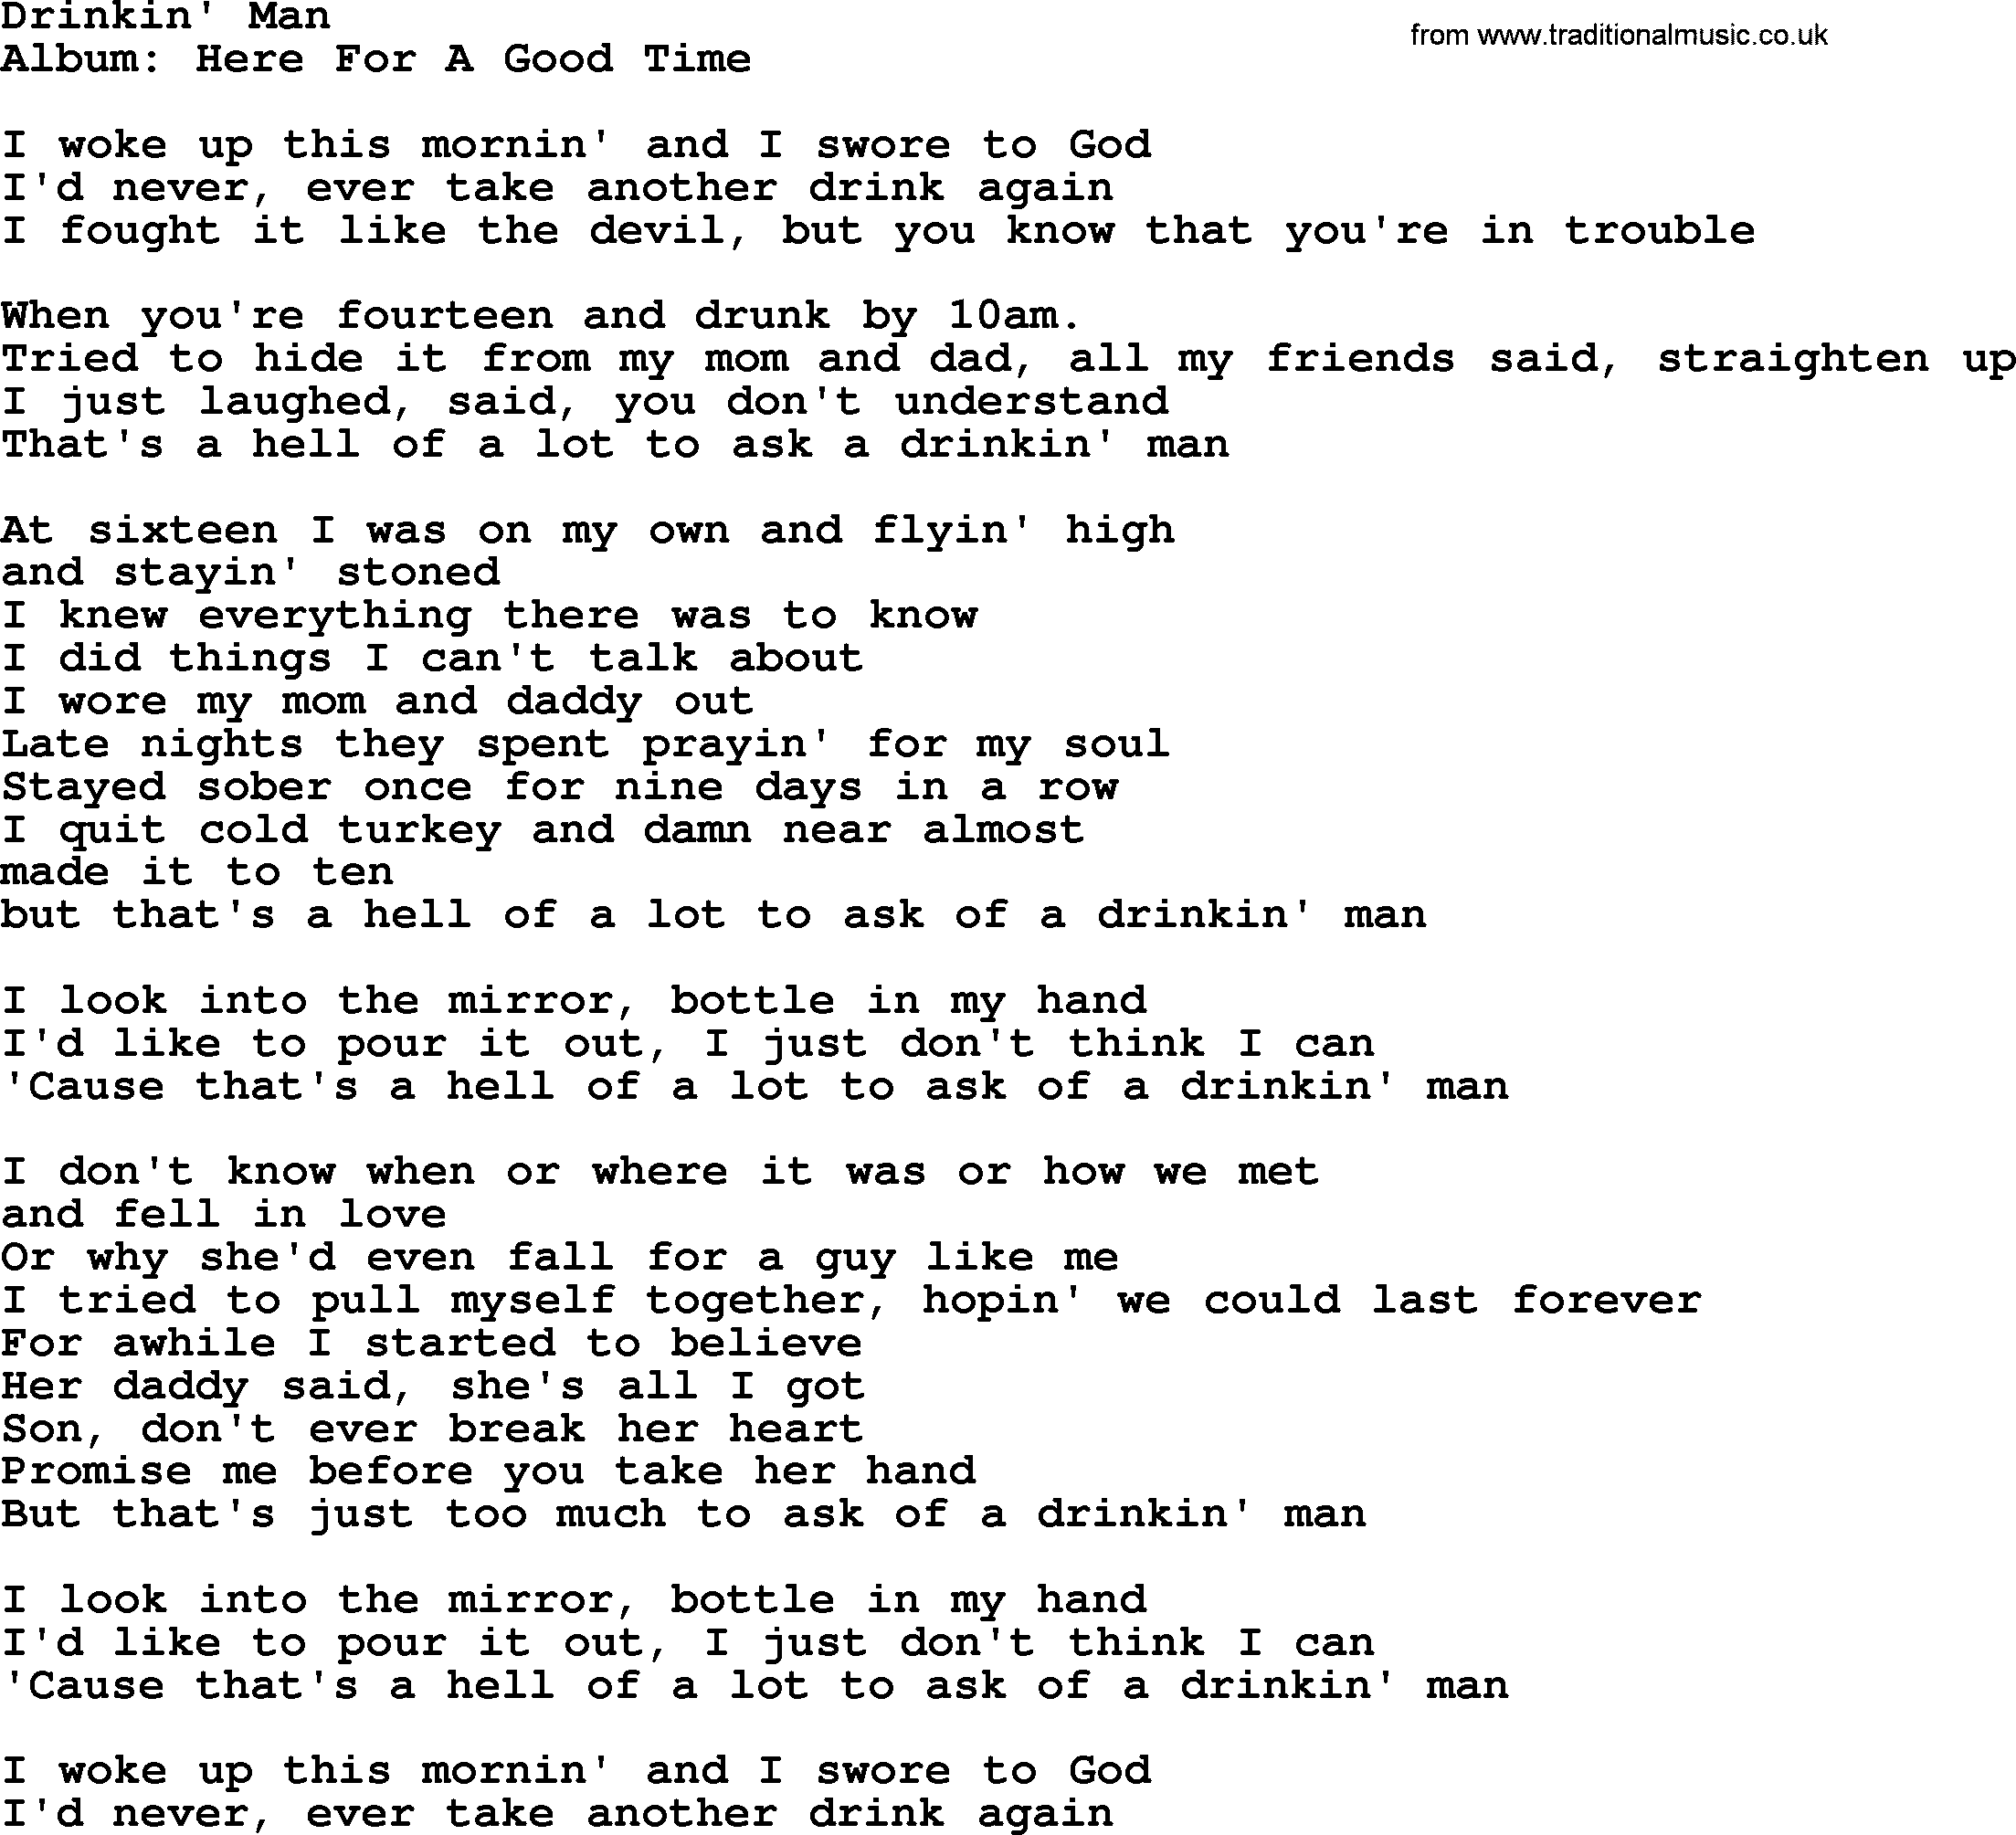 Drinkin' Man, by George Strait - lyrics